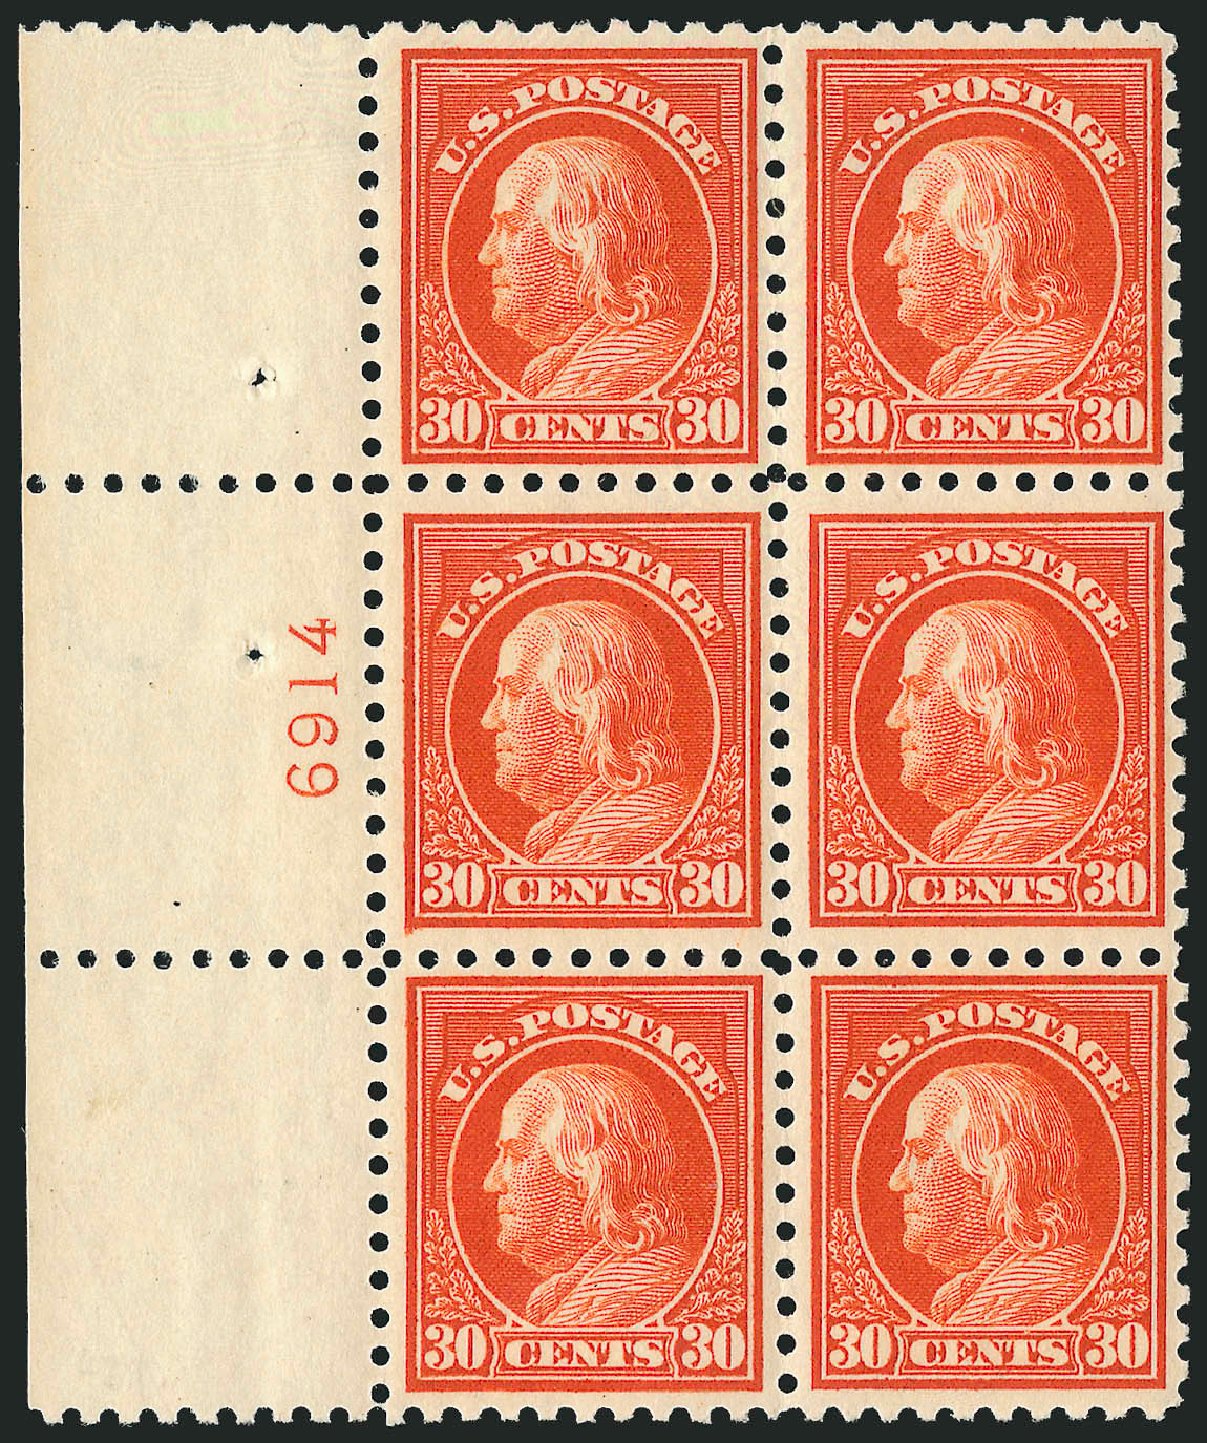 US Stamp Price Scott Cat. # 439: 1914 30c Franklin Perf 10. Robert Siegel Auction Galleries, Sep 2014, Sale 1078, Lot 533